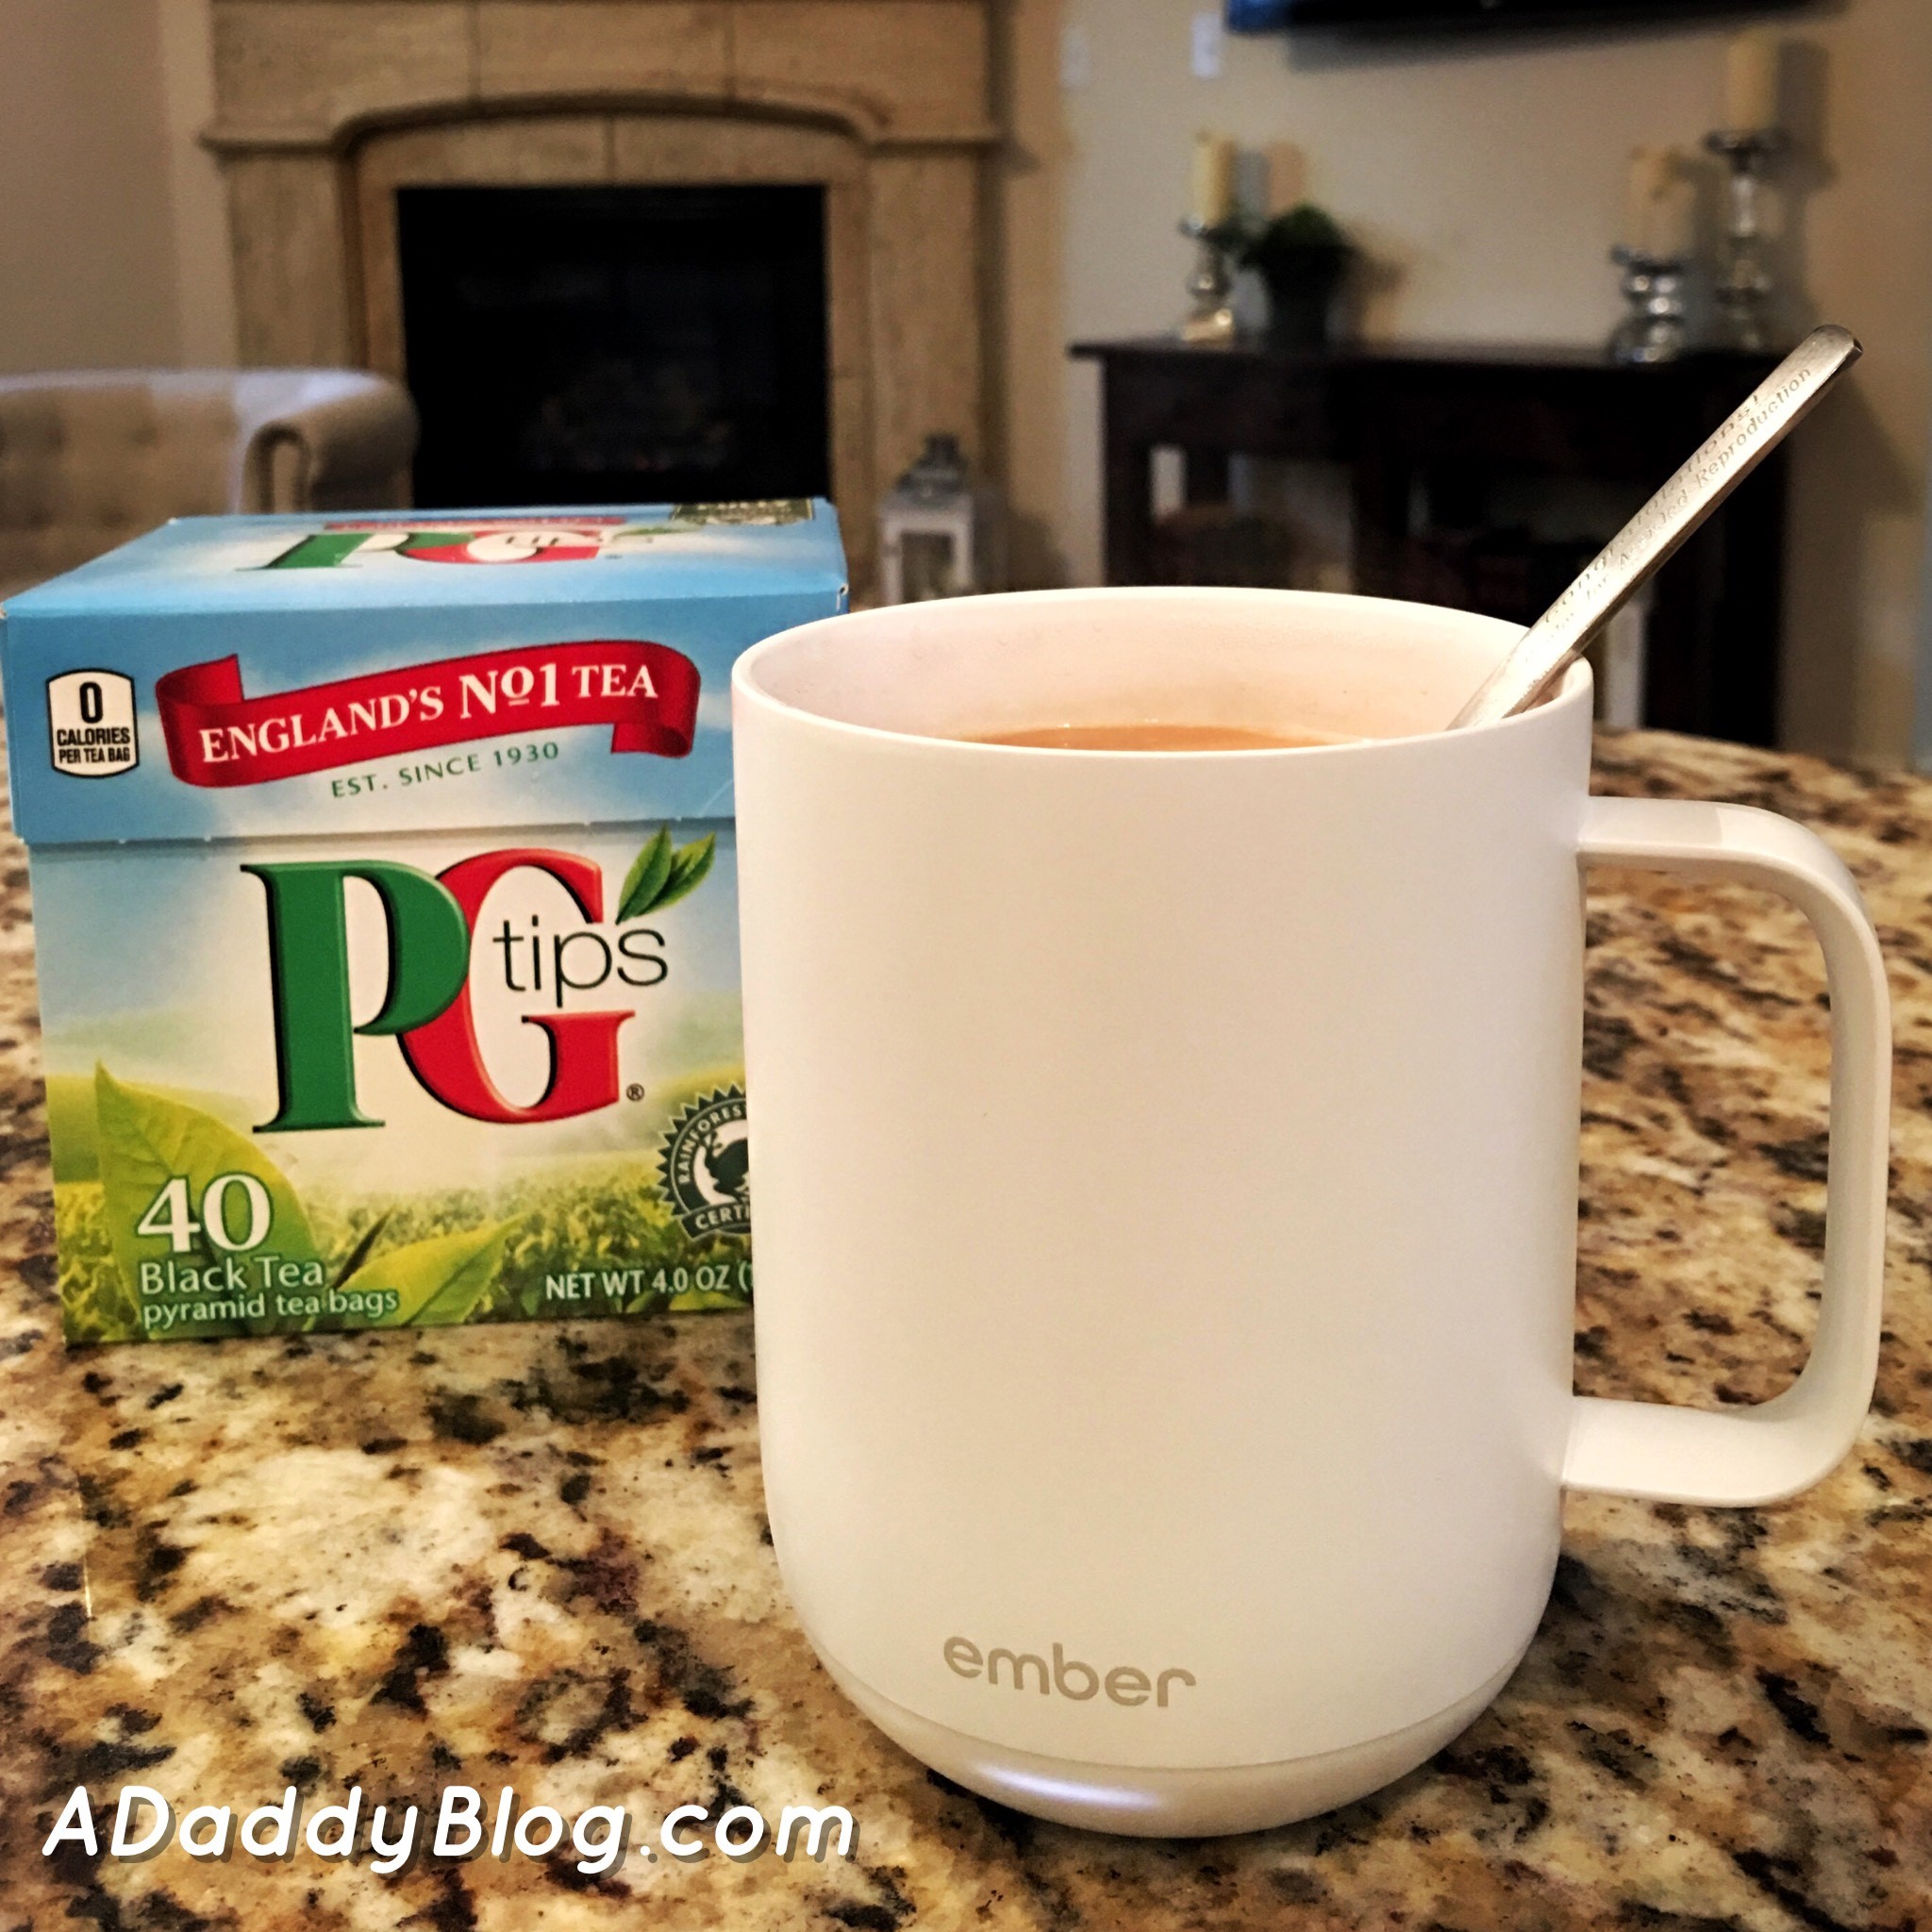 https://adaddyblog.com/wp-content/uploads/2018/01/Ember-Ceramic-Temperature-Controlled-Mug-for-Coffee-Tea-1.jpg